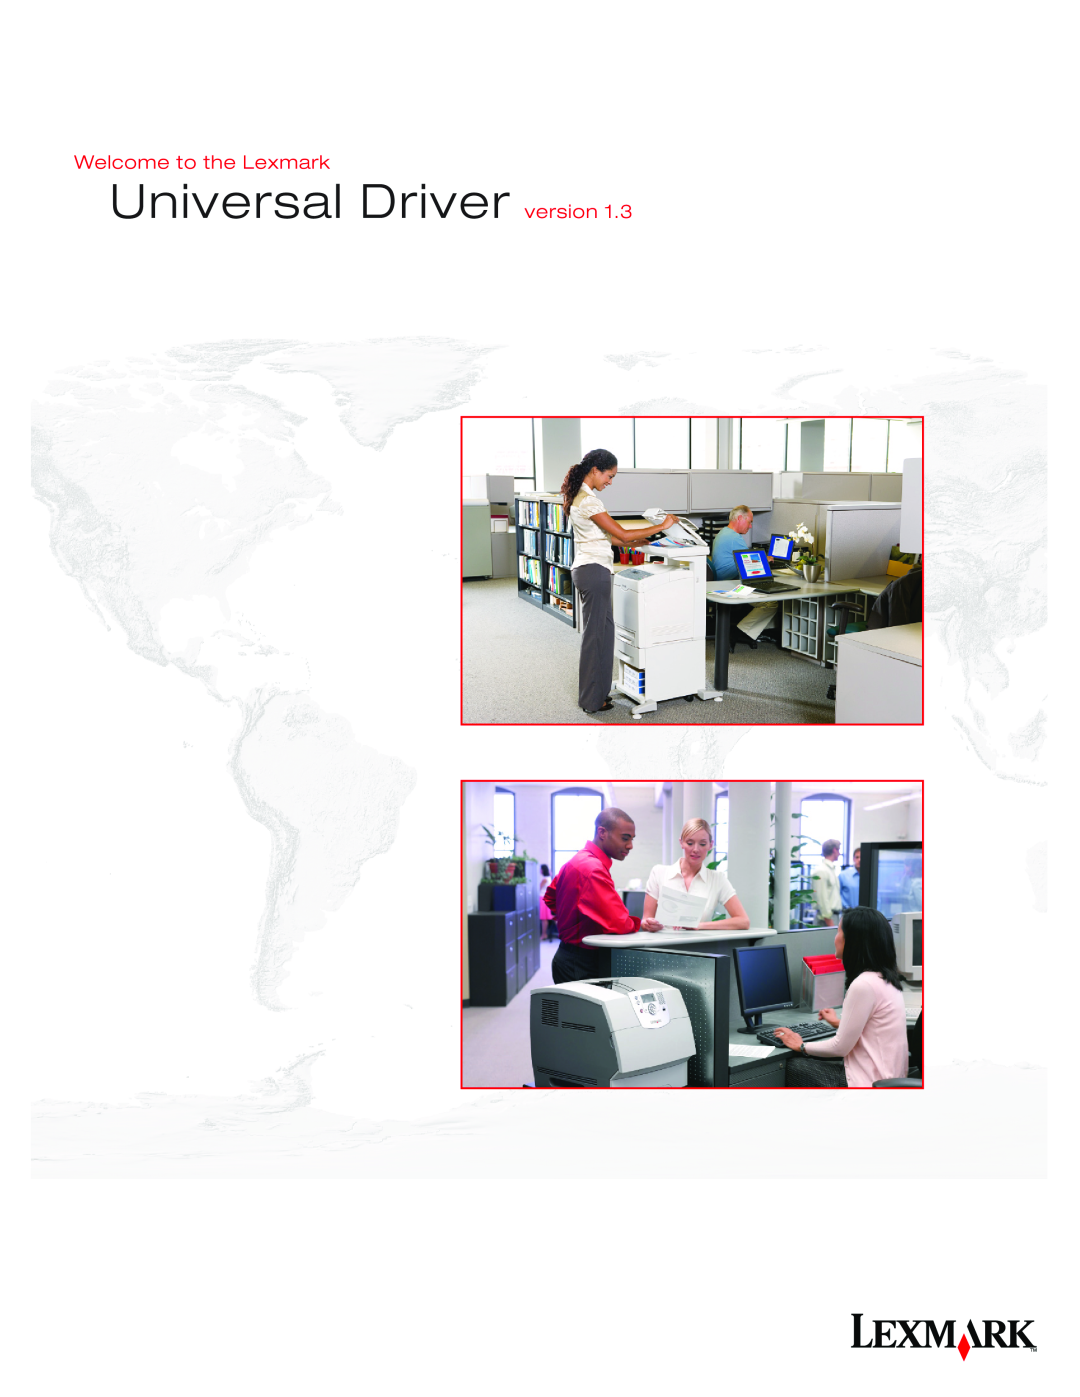 Lexmark Universal Driver manual 